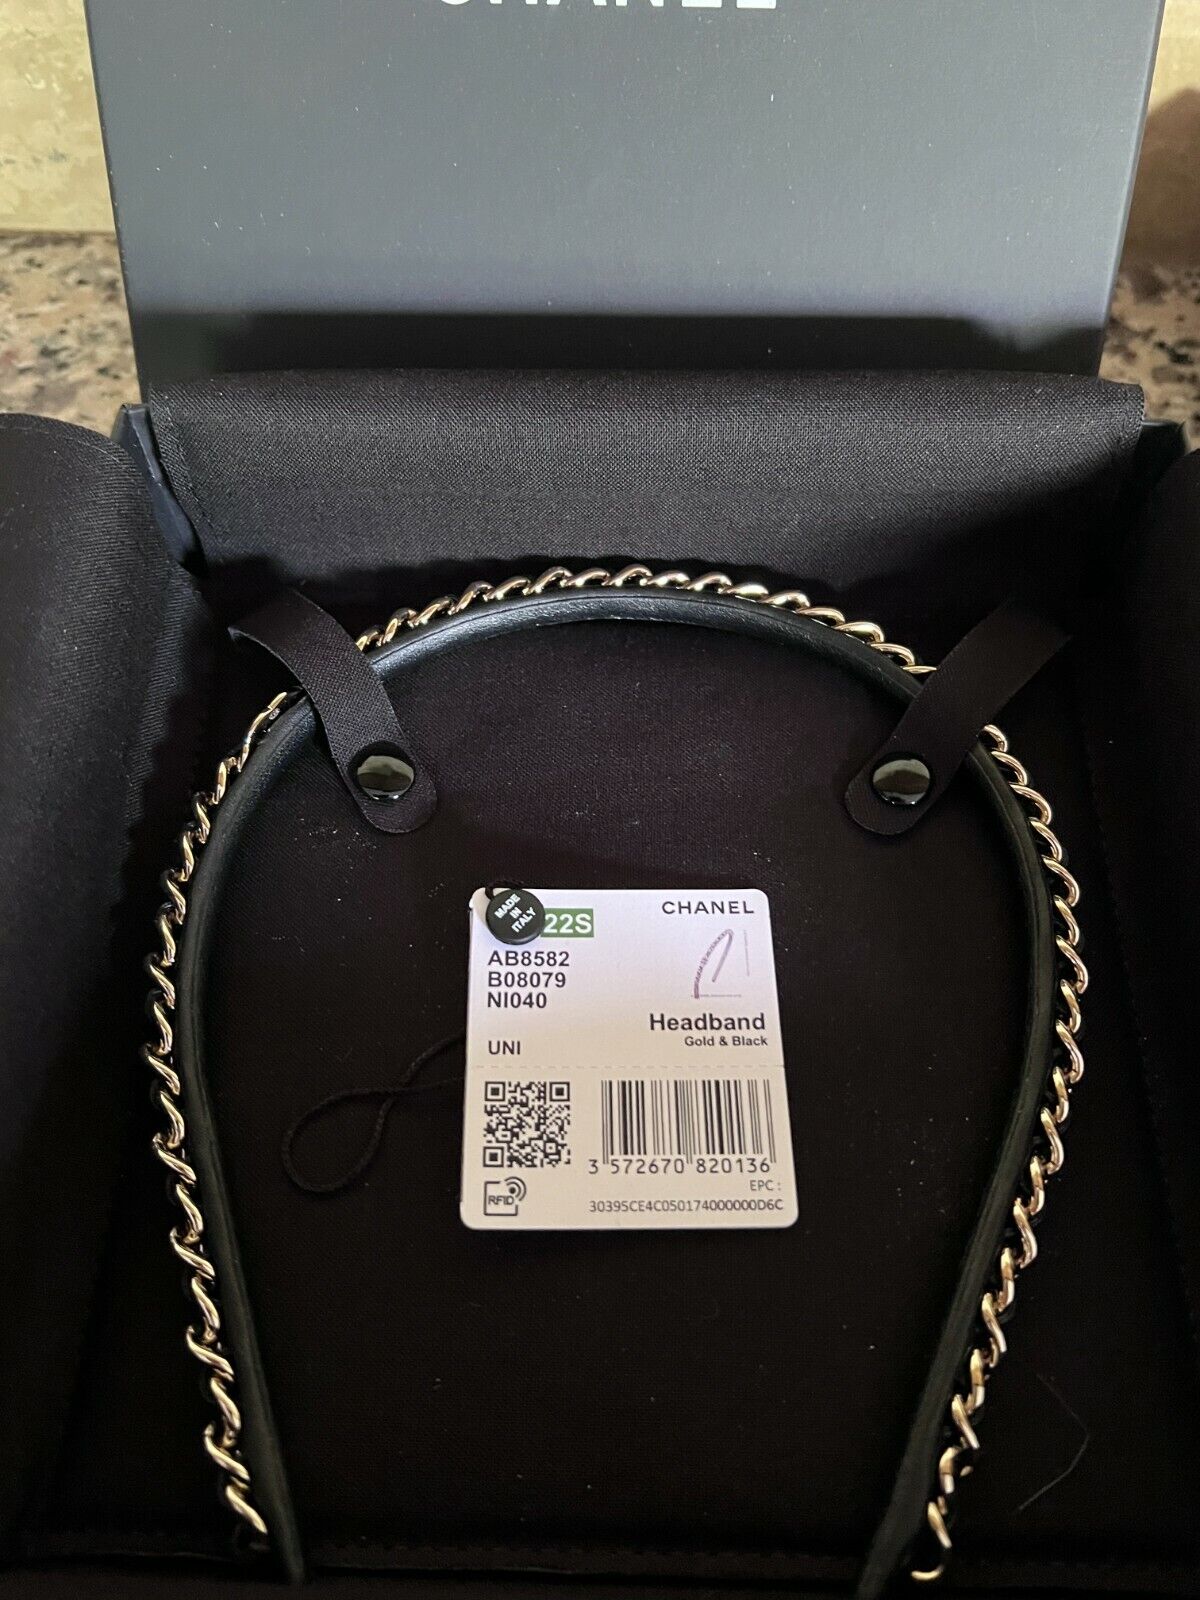 CHANEL 22S Classic Black Leather Gold Chain headband CC logo | eBay